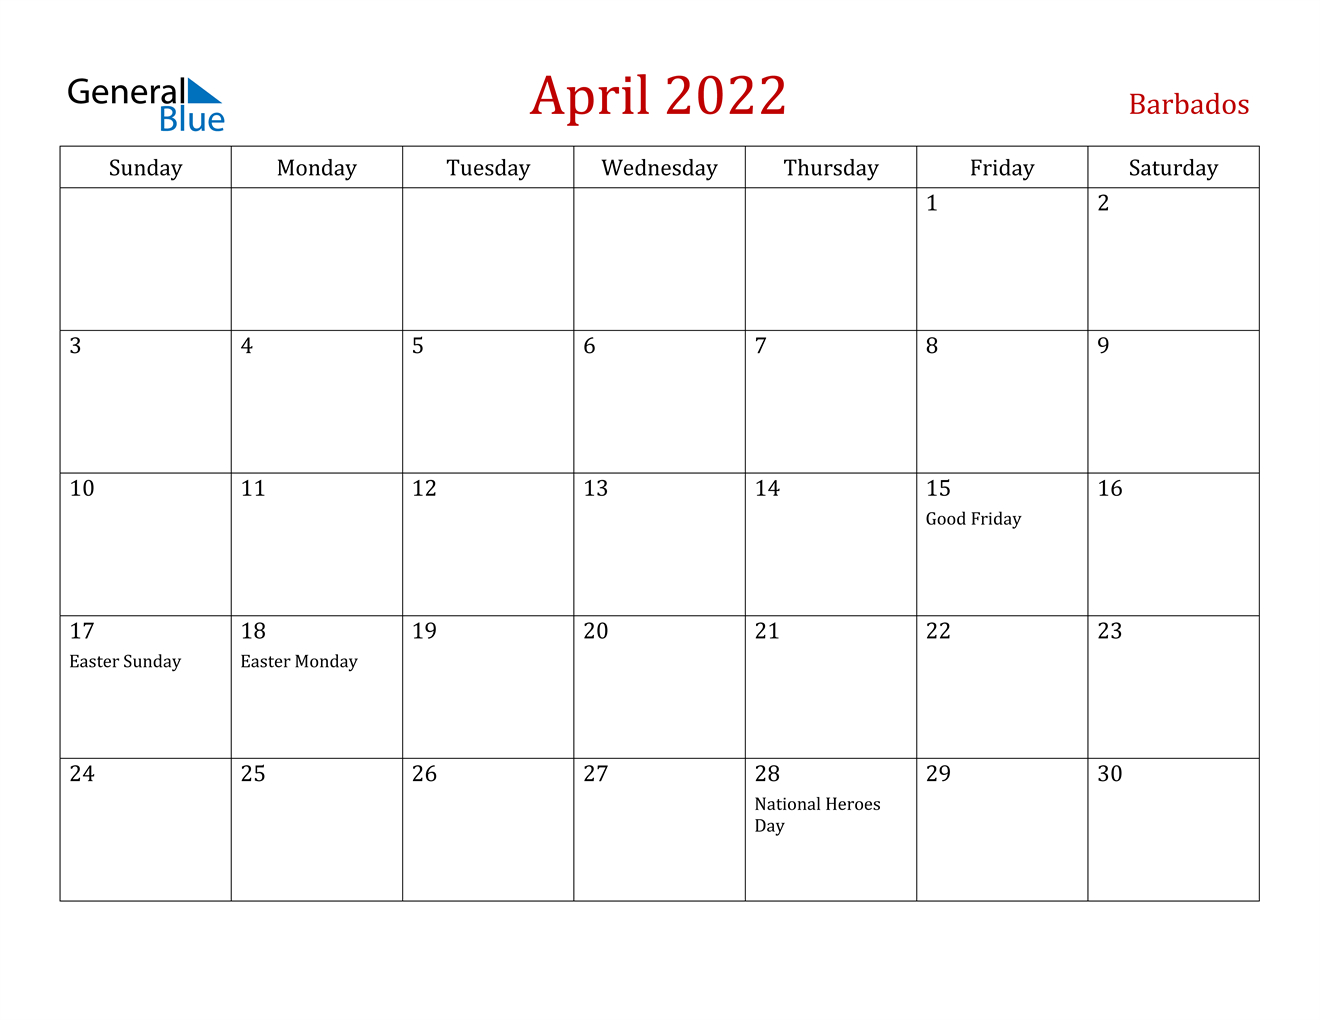 April 2022 Calendar - Barbados  November 2022 To April 2022 Calendar